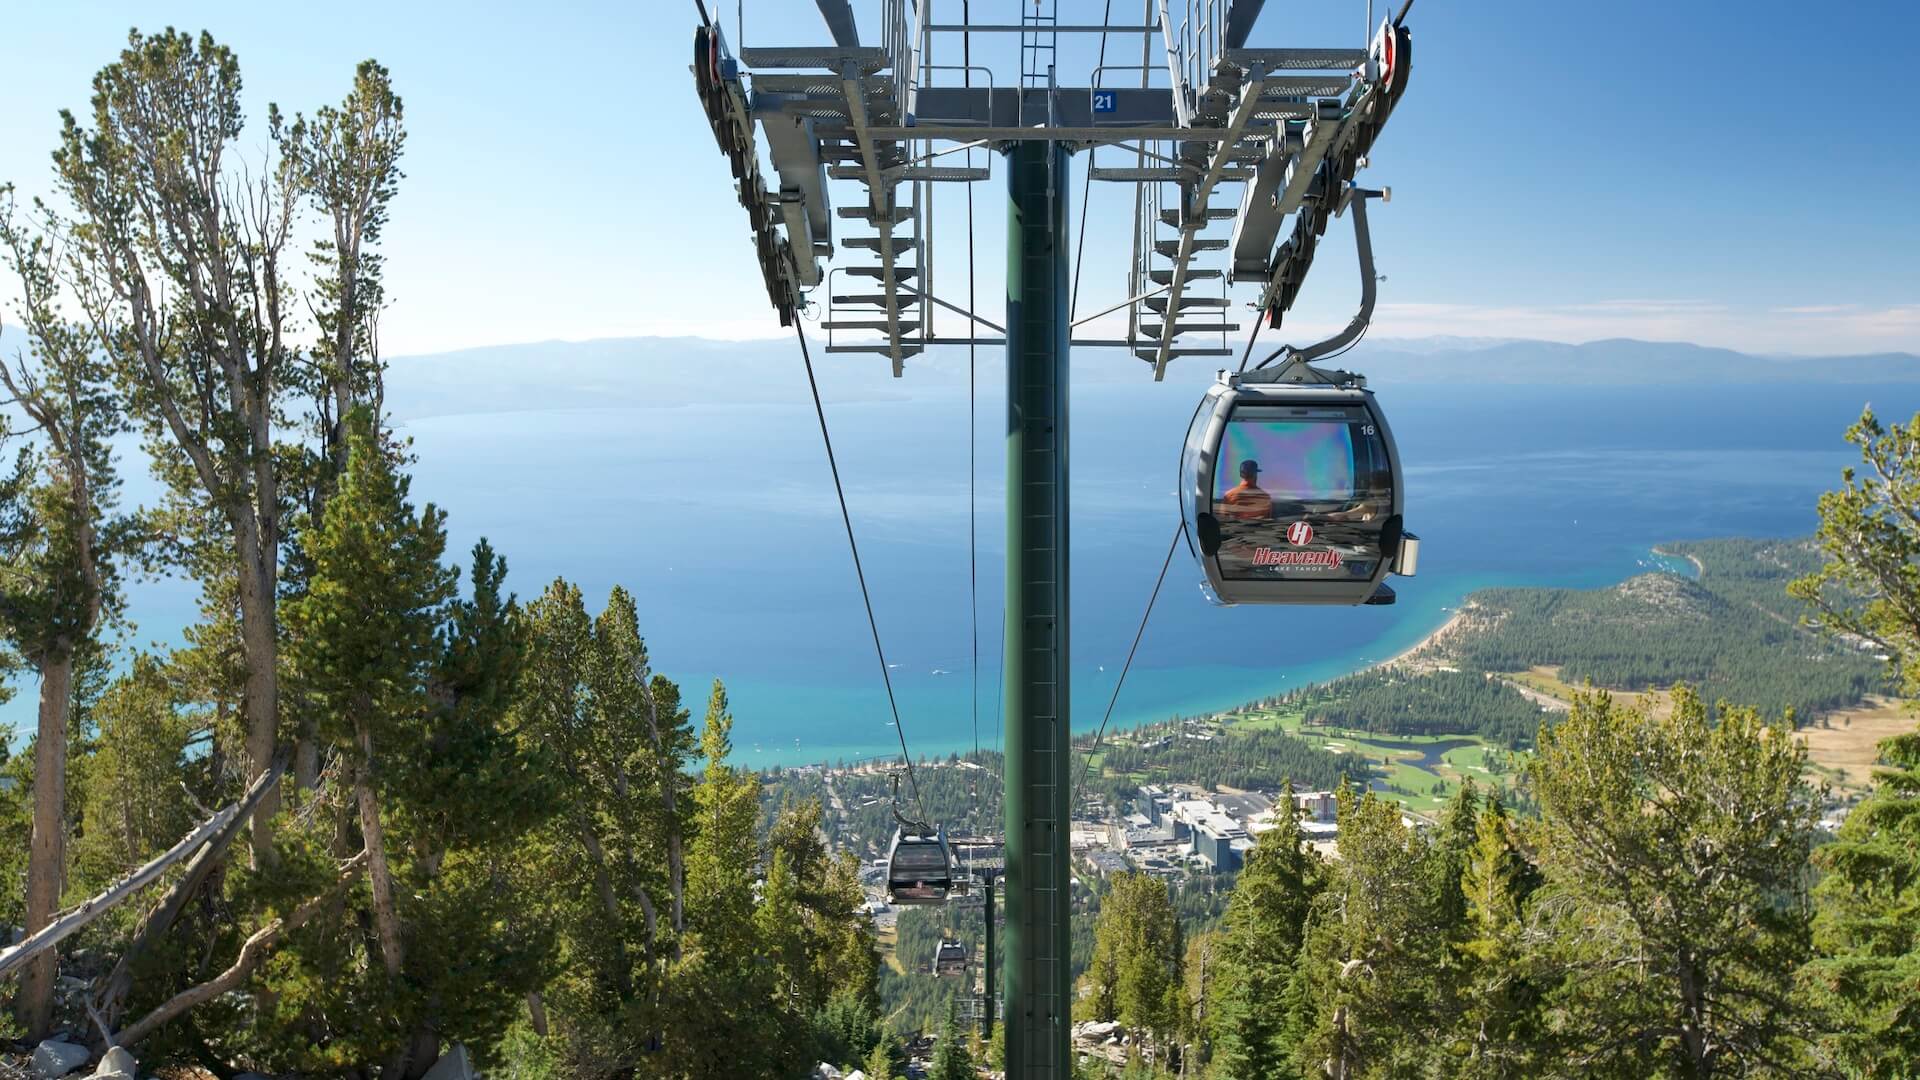 Heavenly Gondola Lake Tahoe - Brand USA / LTVA